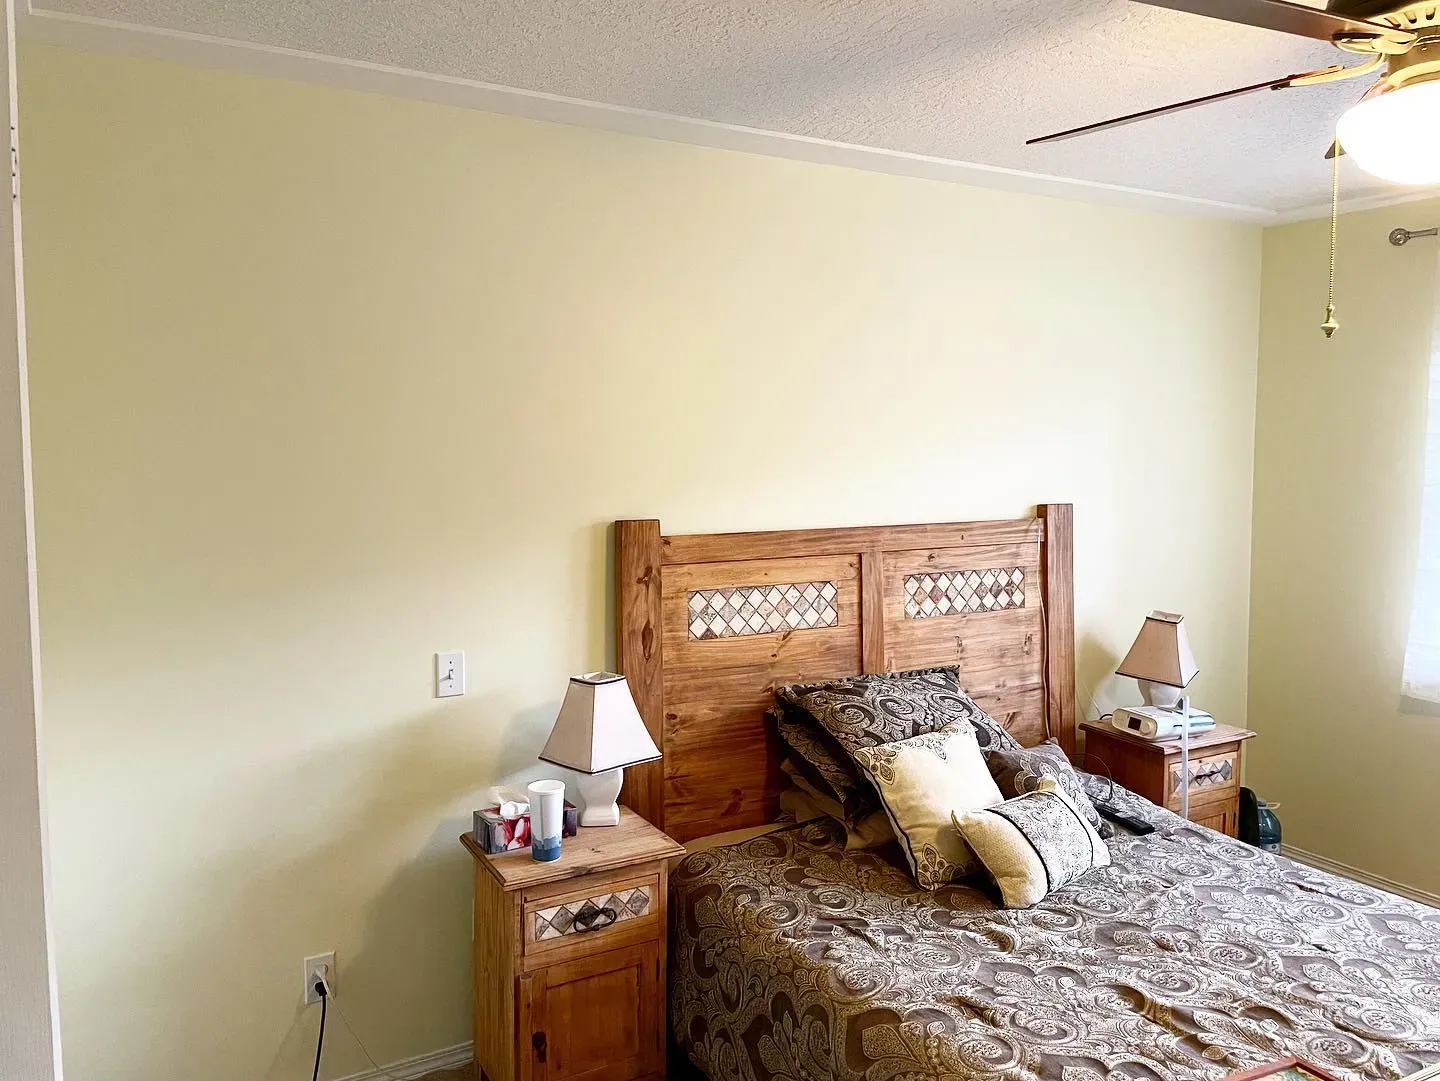 Benjamin Moore Pale Celery bedroom paint